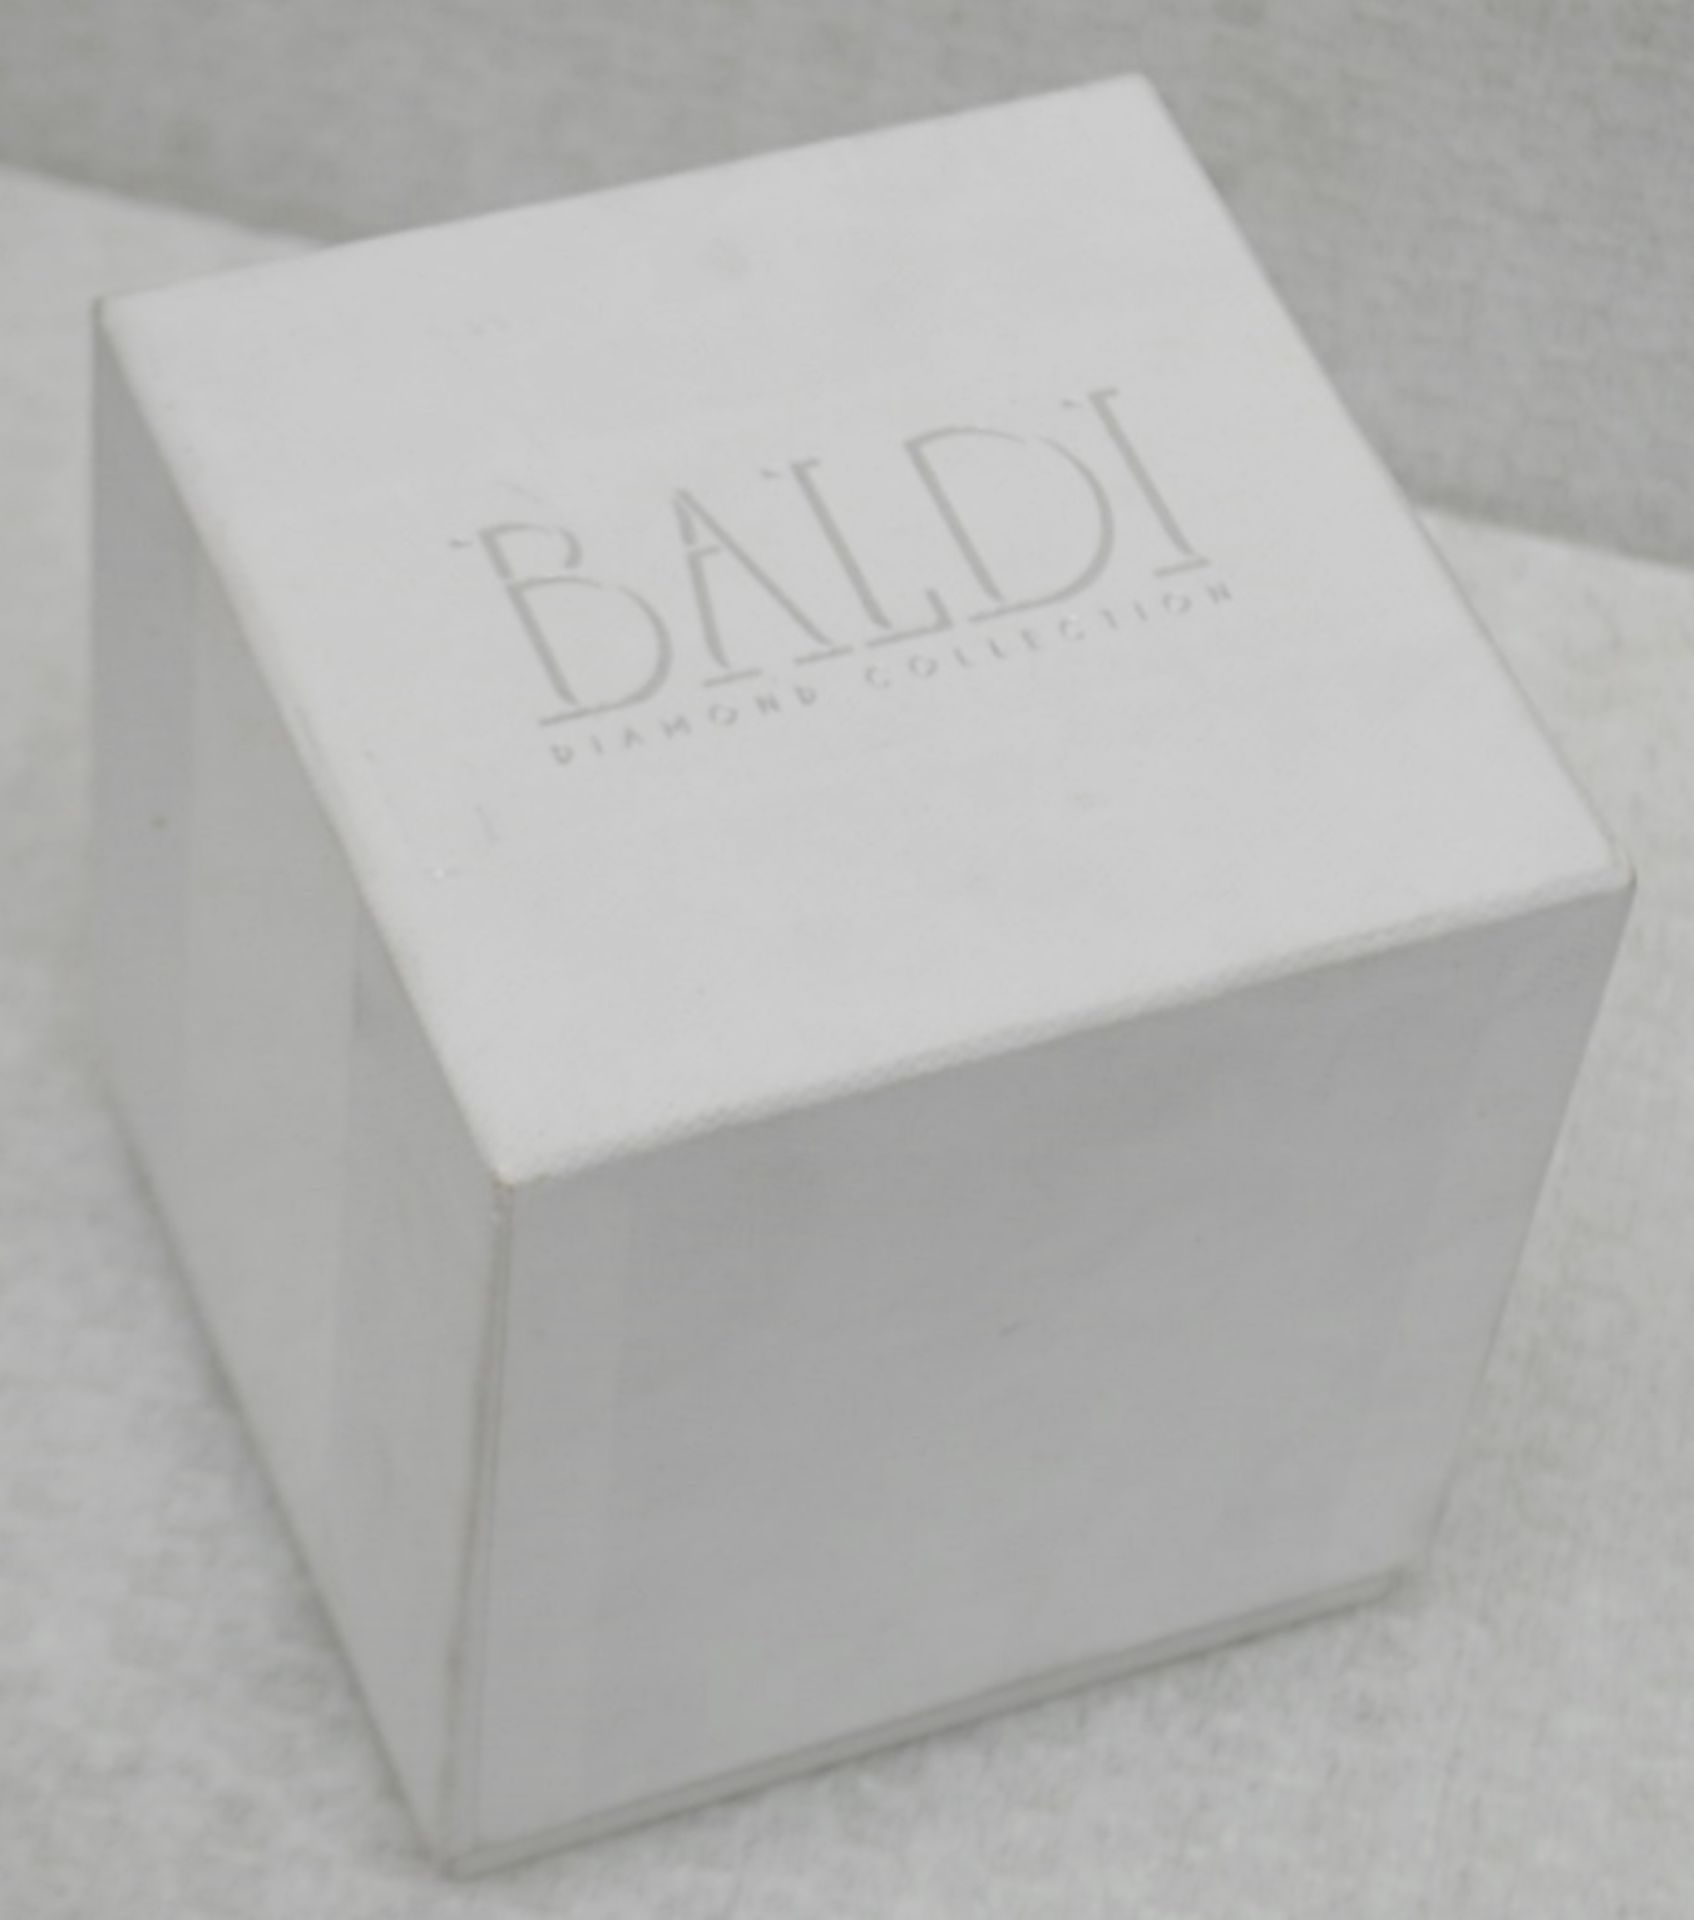 1 x BALDI 'Home Jewels' Italian Hand-crafted Artisan Clear Diamond Crystal Perfume Box, With A - Image 2 of 2